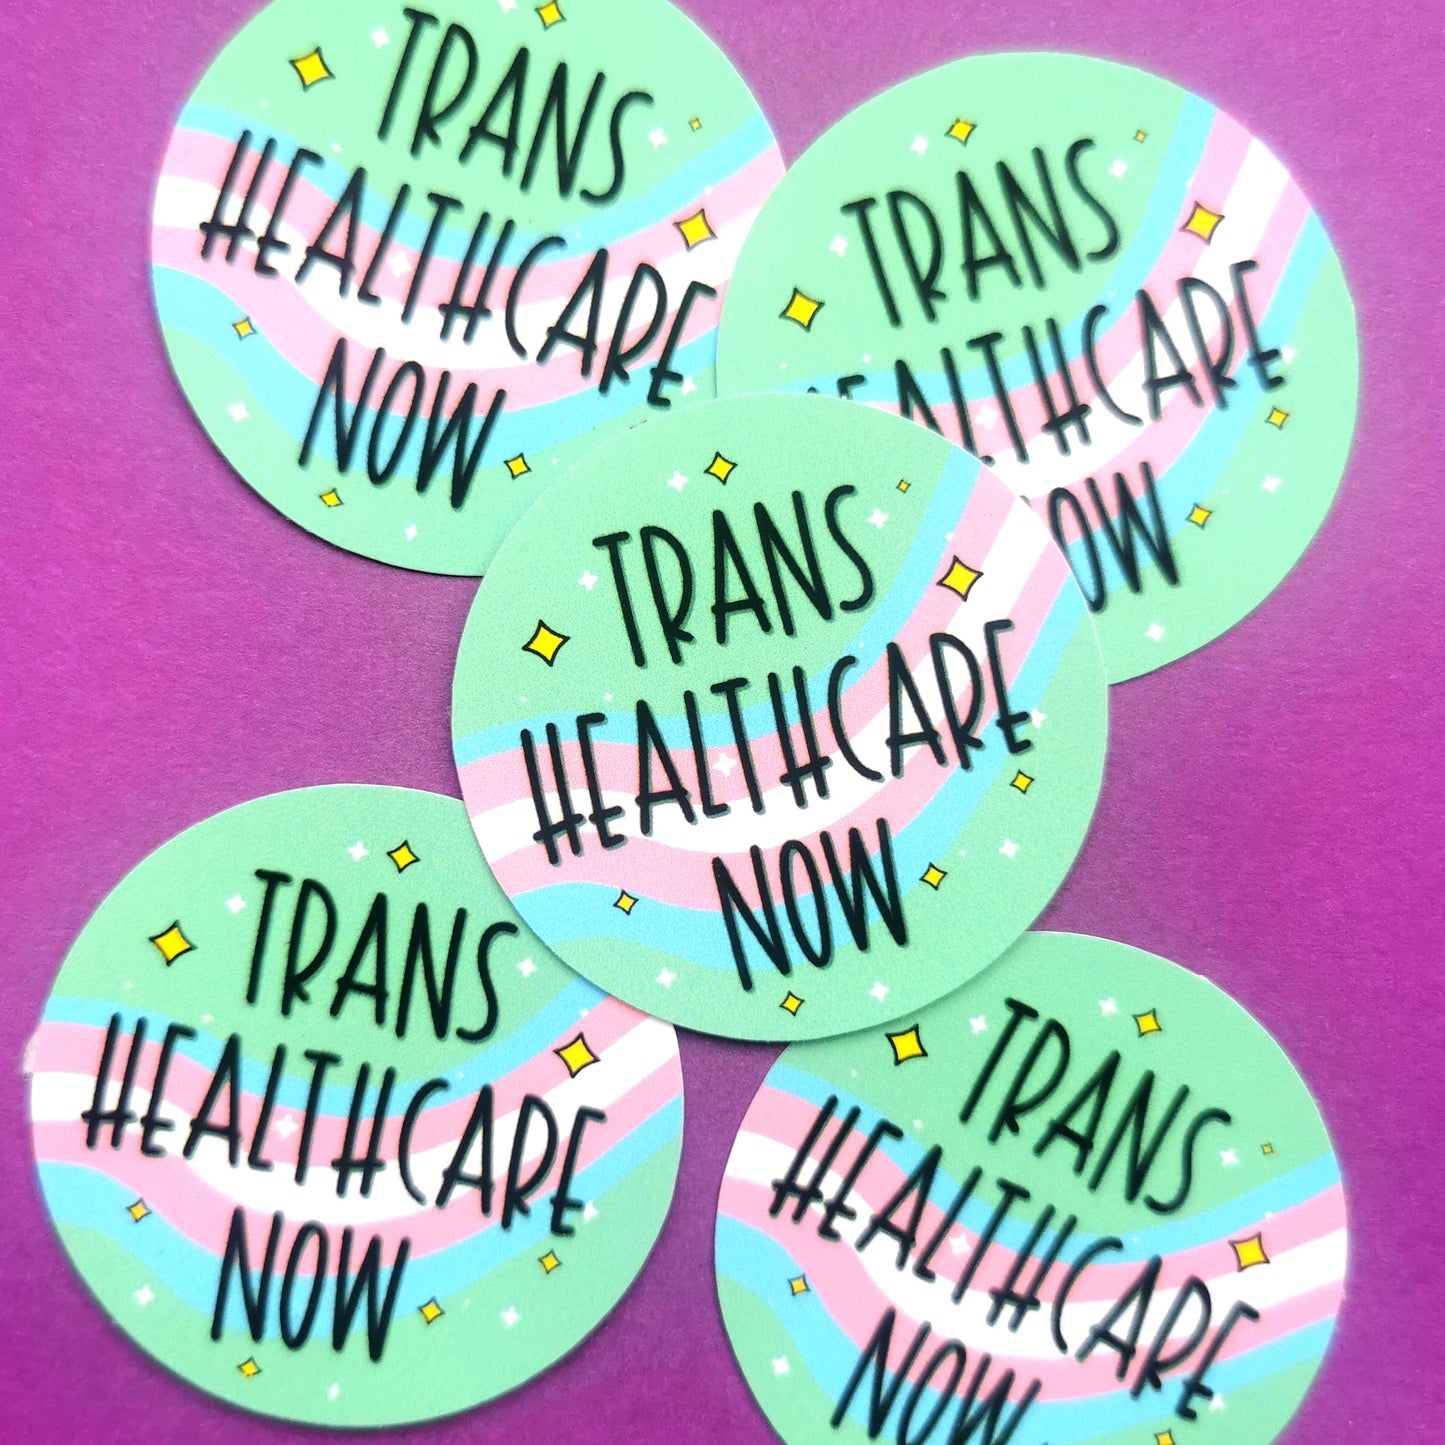 Trans Healthcare Now sticker